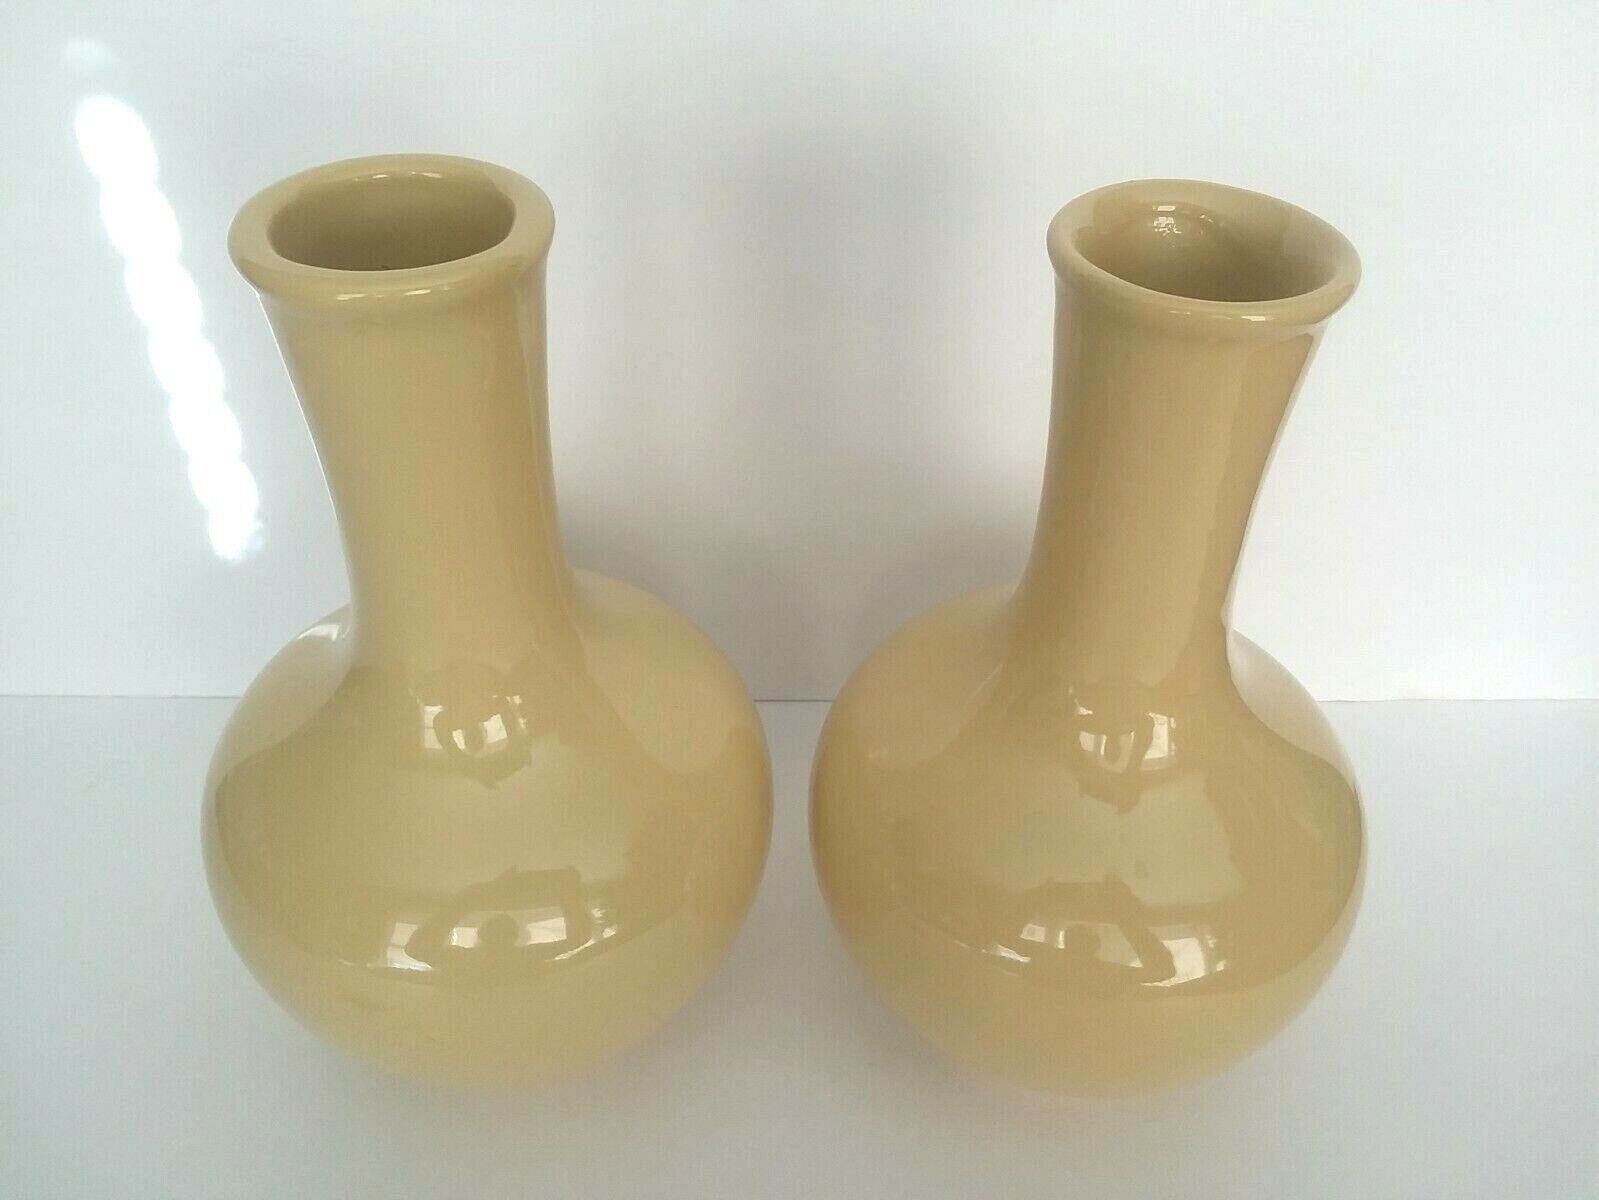 2 Vintage KOHLER Pottery Vases Used As TEST glaze  Sink Tub Toilet Genie bottle Без бренда - фотография #2